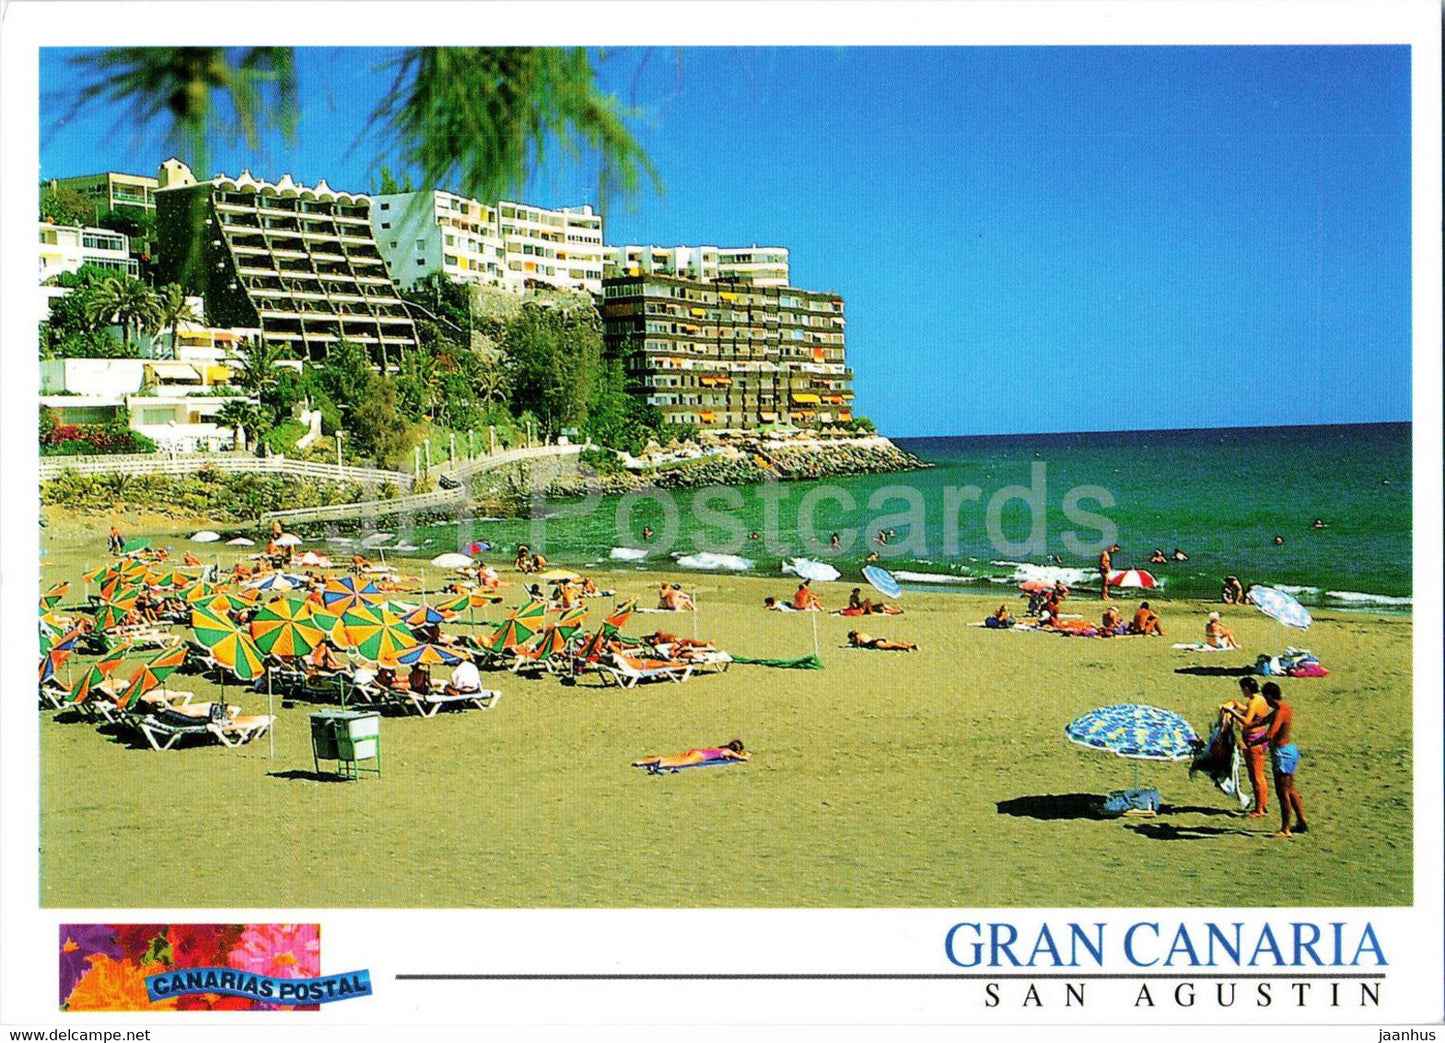 San Augustin - hotel - beach - Gran Canaria - 20 - Spain - unused - JH Postcards